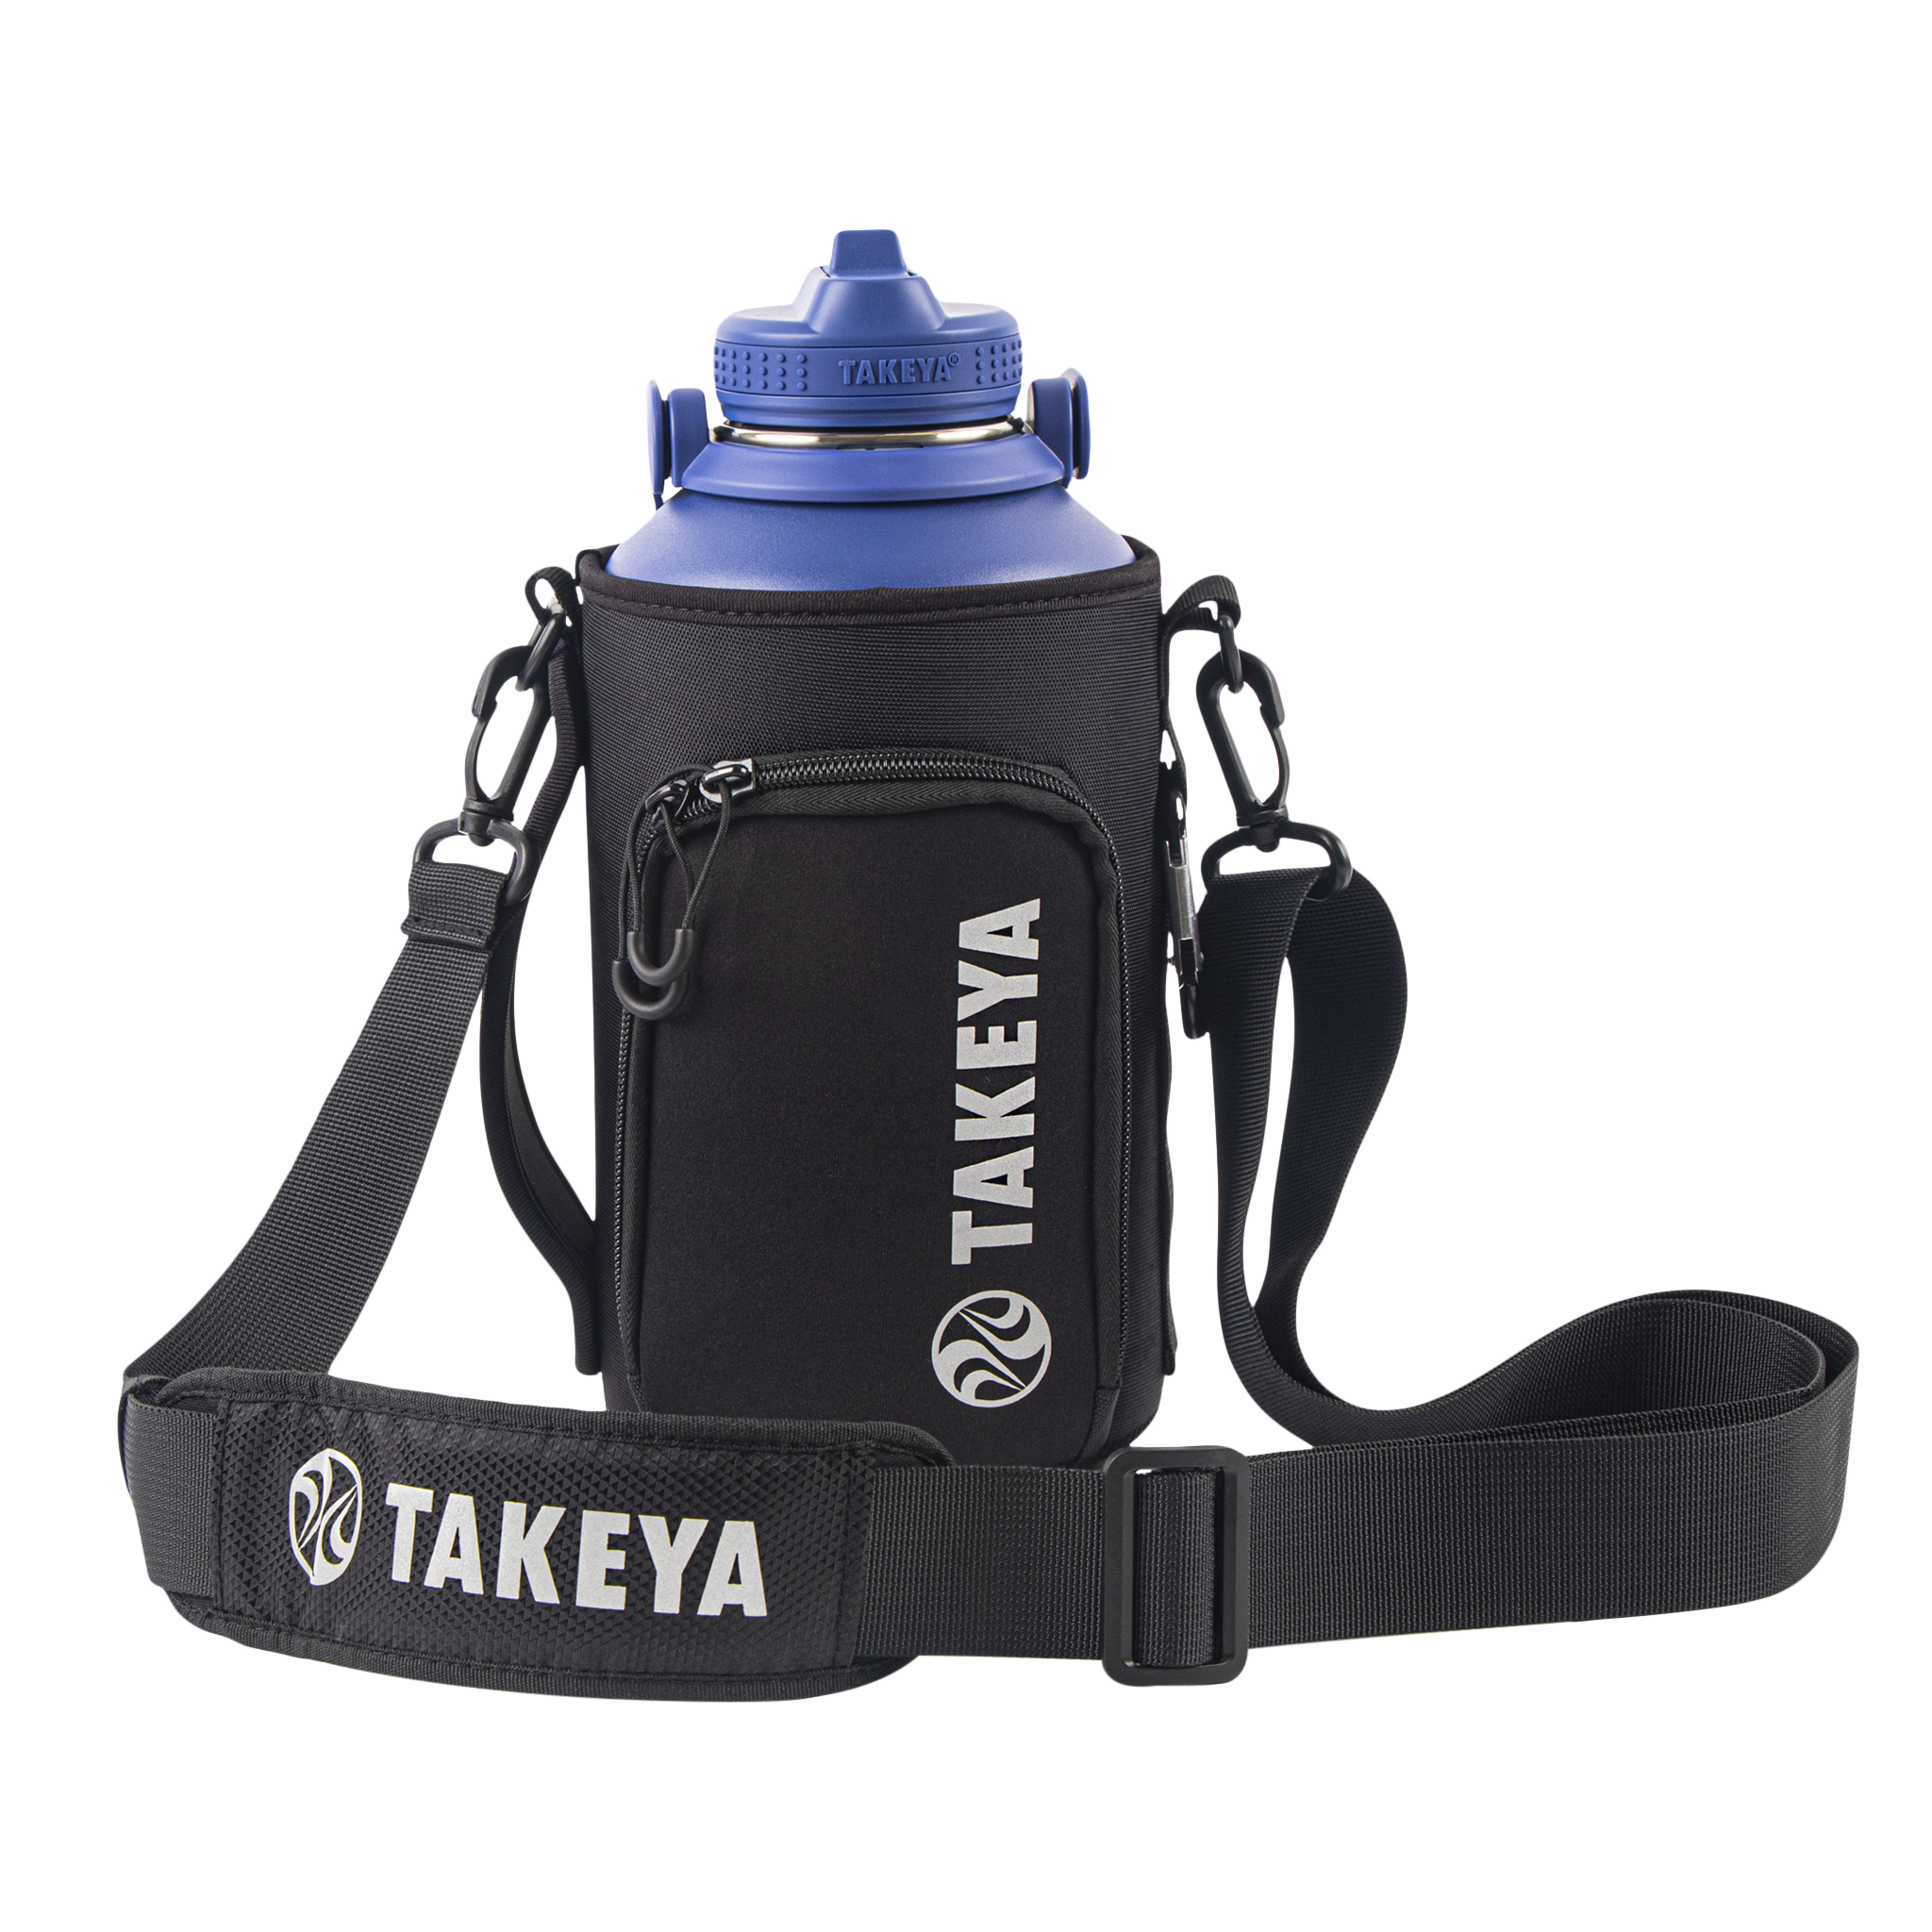 Coldest Carrier, Holder, Sleeve - Fits Insulated Stainless Steel Sports Water  Bottle, Adjustable Shoulder Strap, Holder Bag Case Pouch Cover (32 oz) 